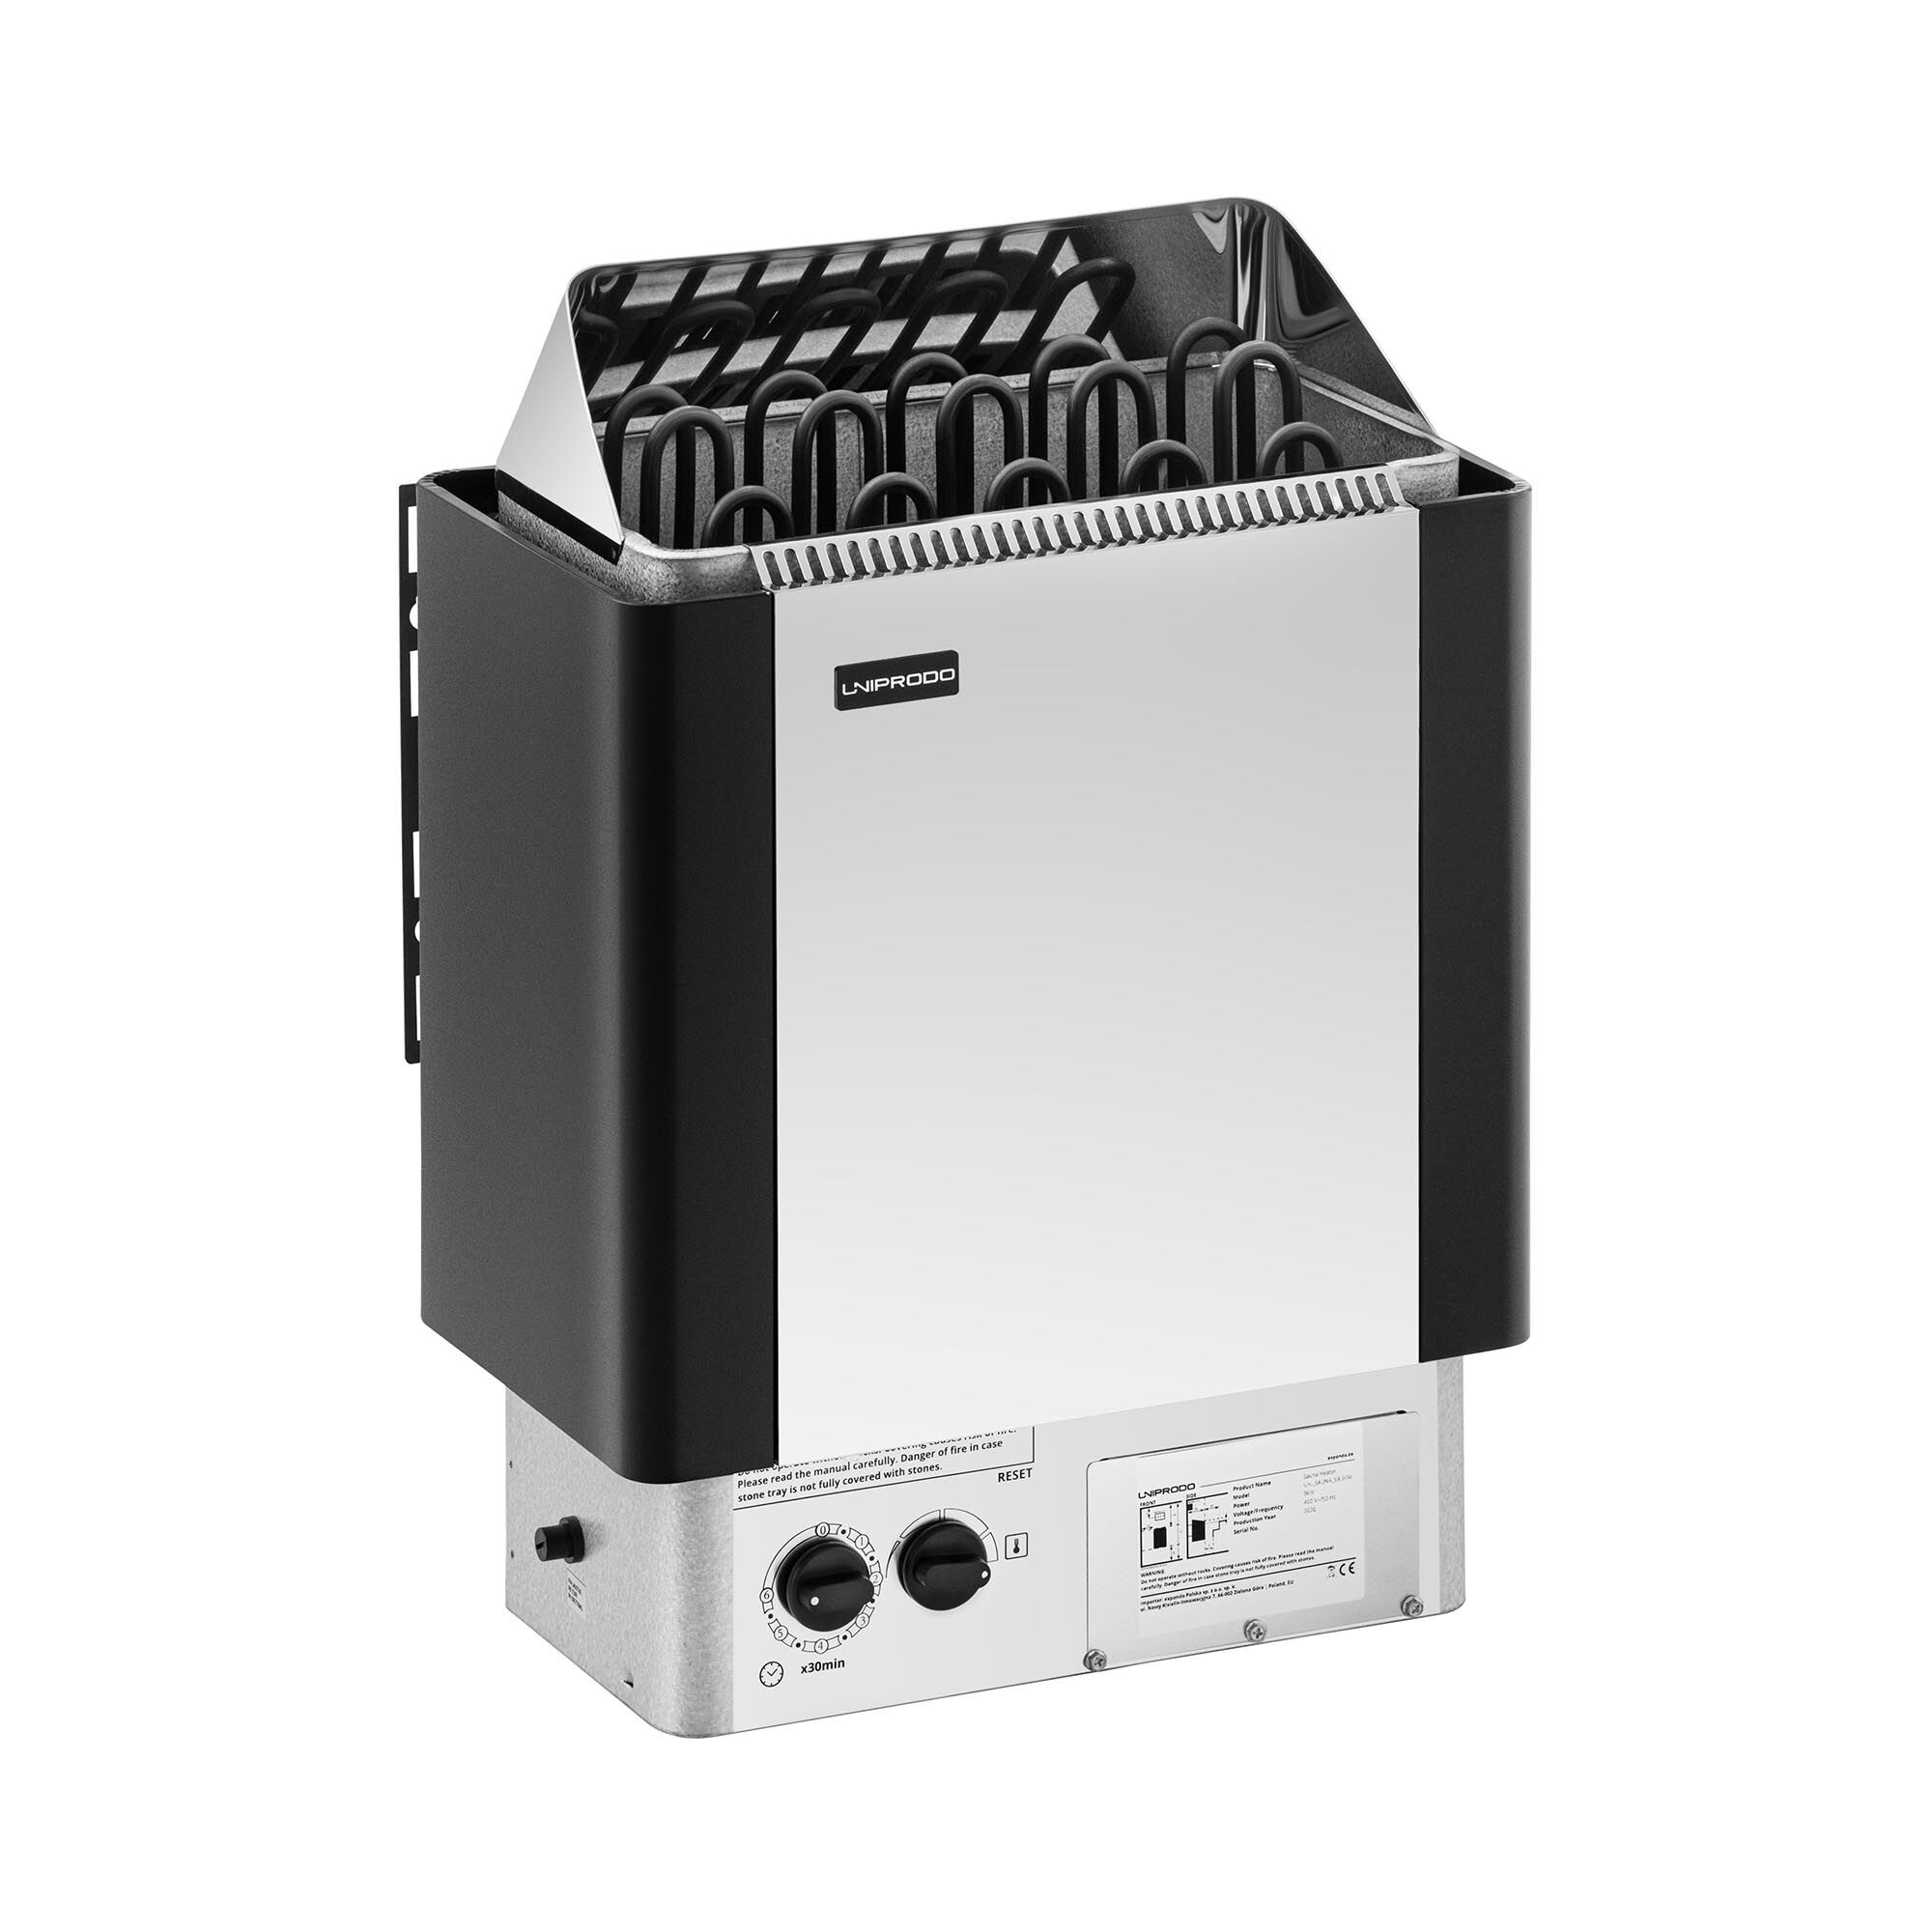 Uniprodo Saunaovn - 9 kW - 30 til 110 °C - inkl. kontrolpanel